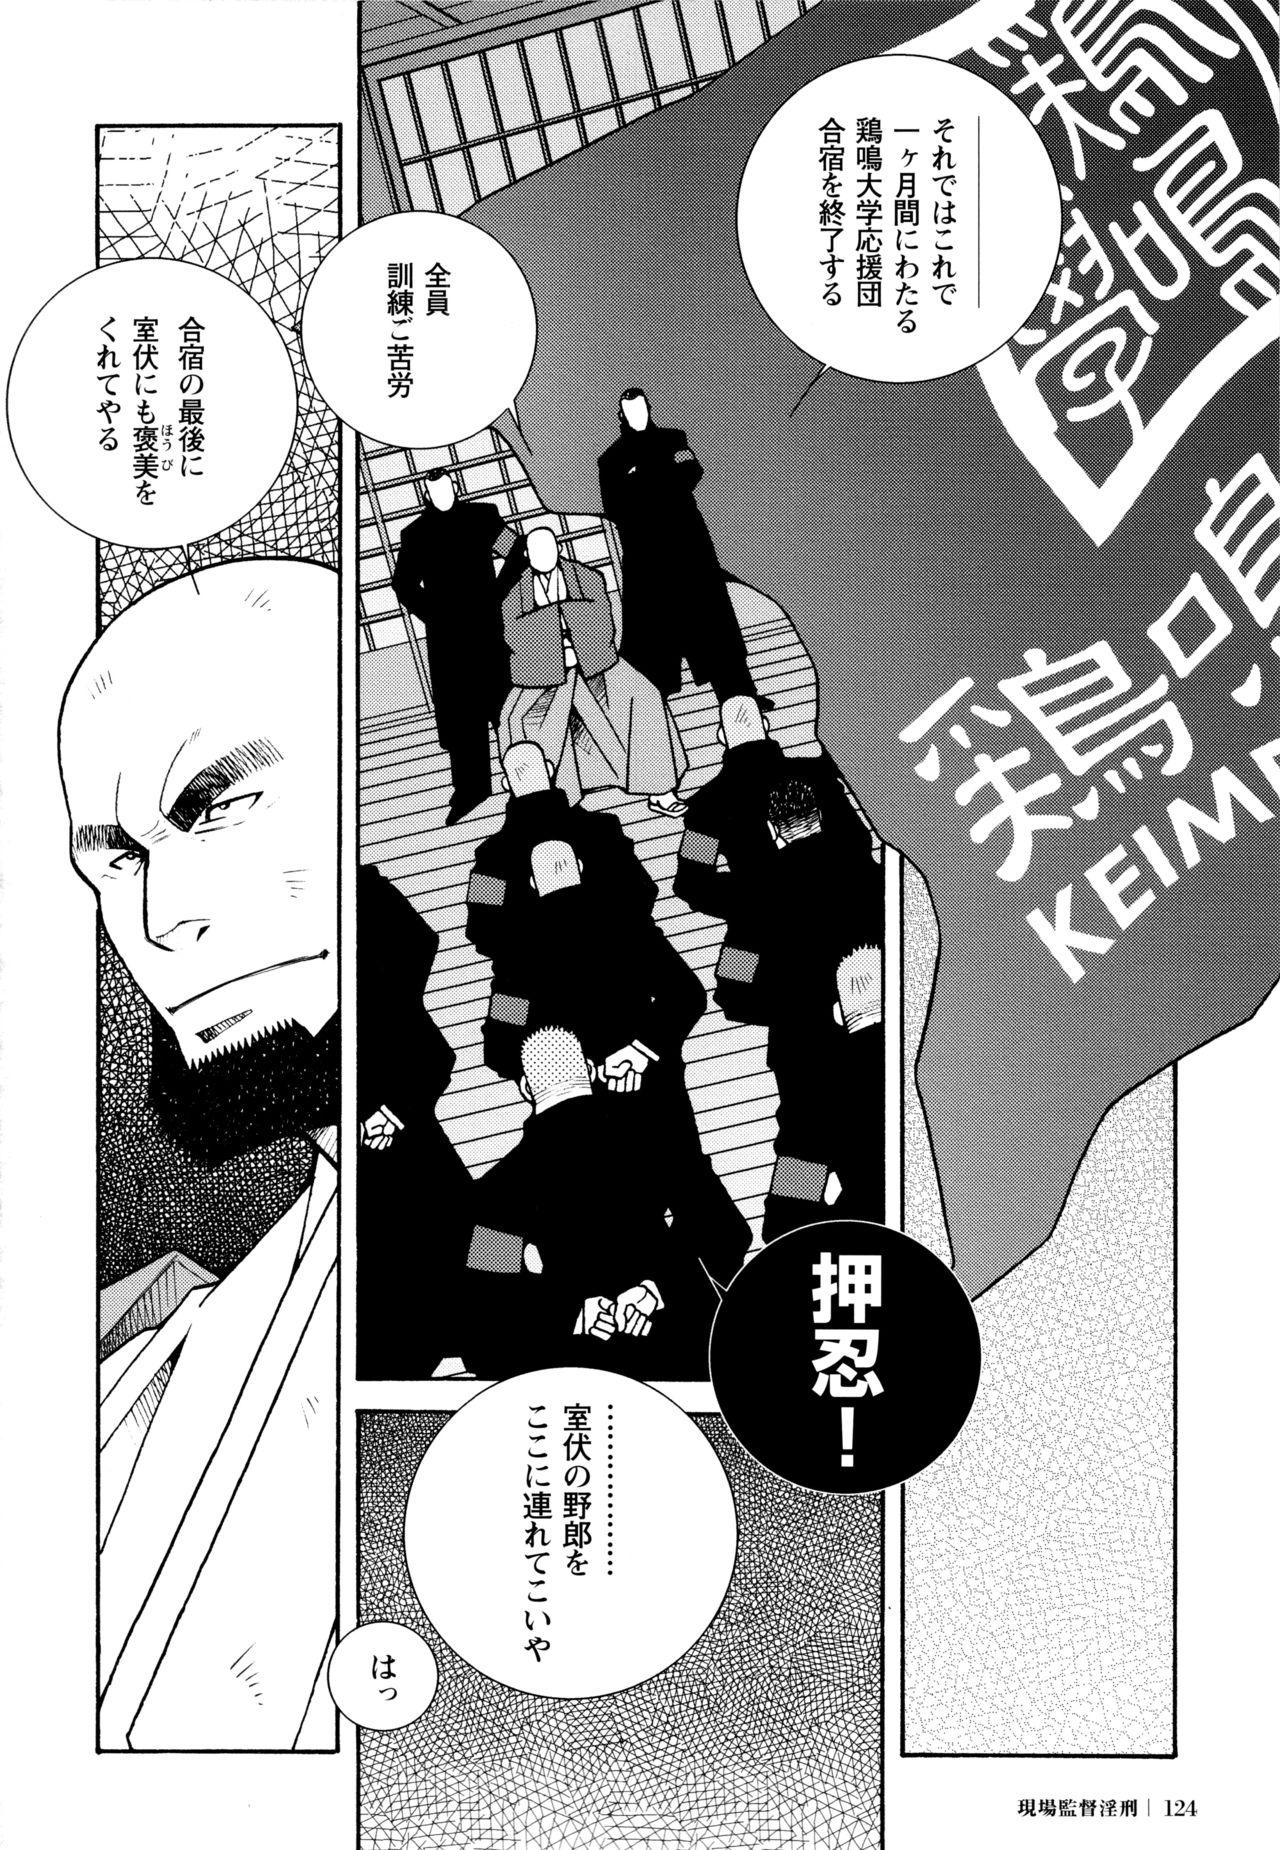 Genba Kantoku Inkei - 	Beating the Bull by KAZ 121